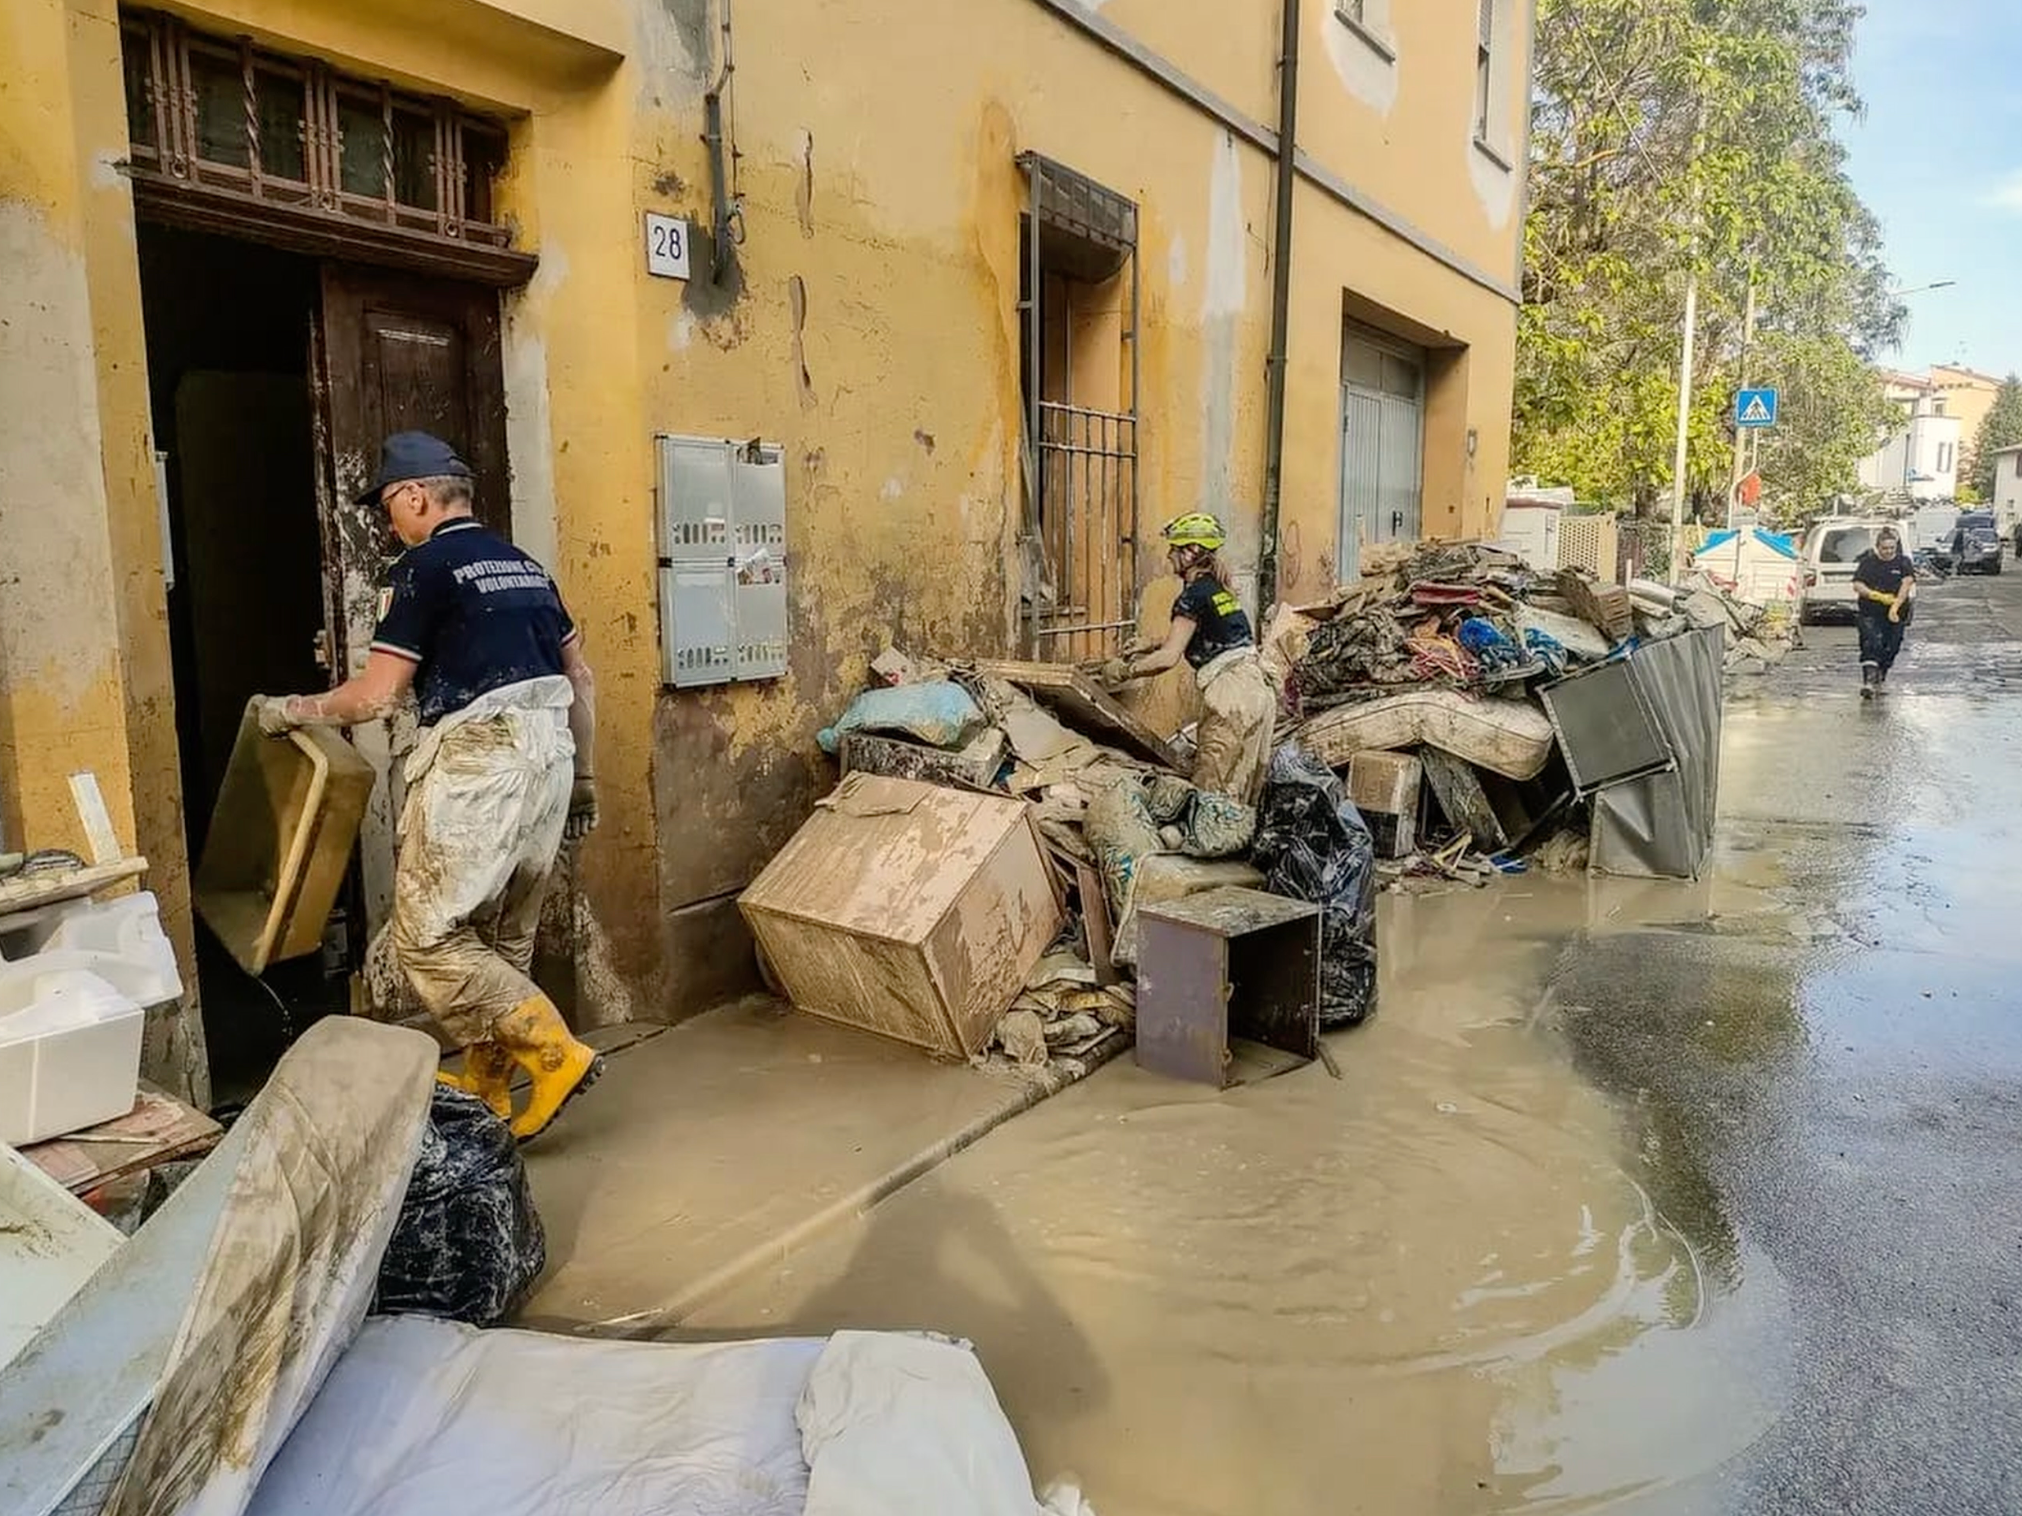 Flood in Emilia: the testimony of newsagent Luca